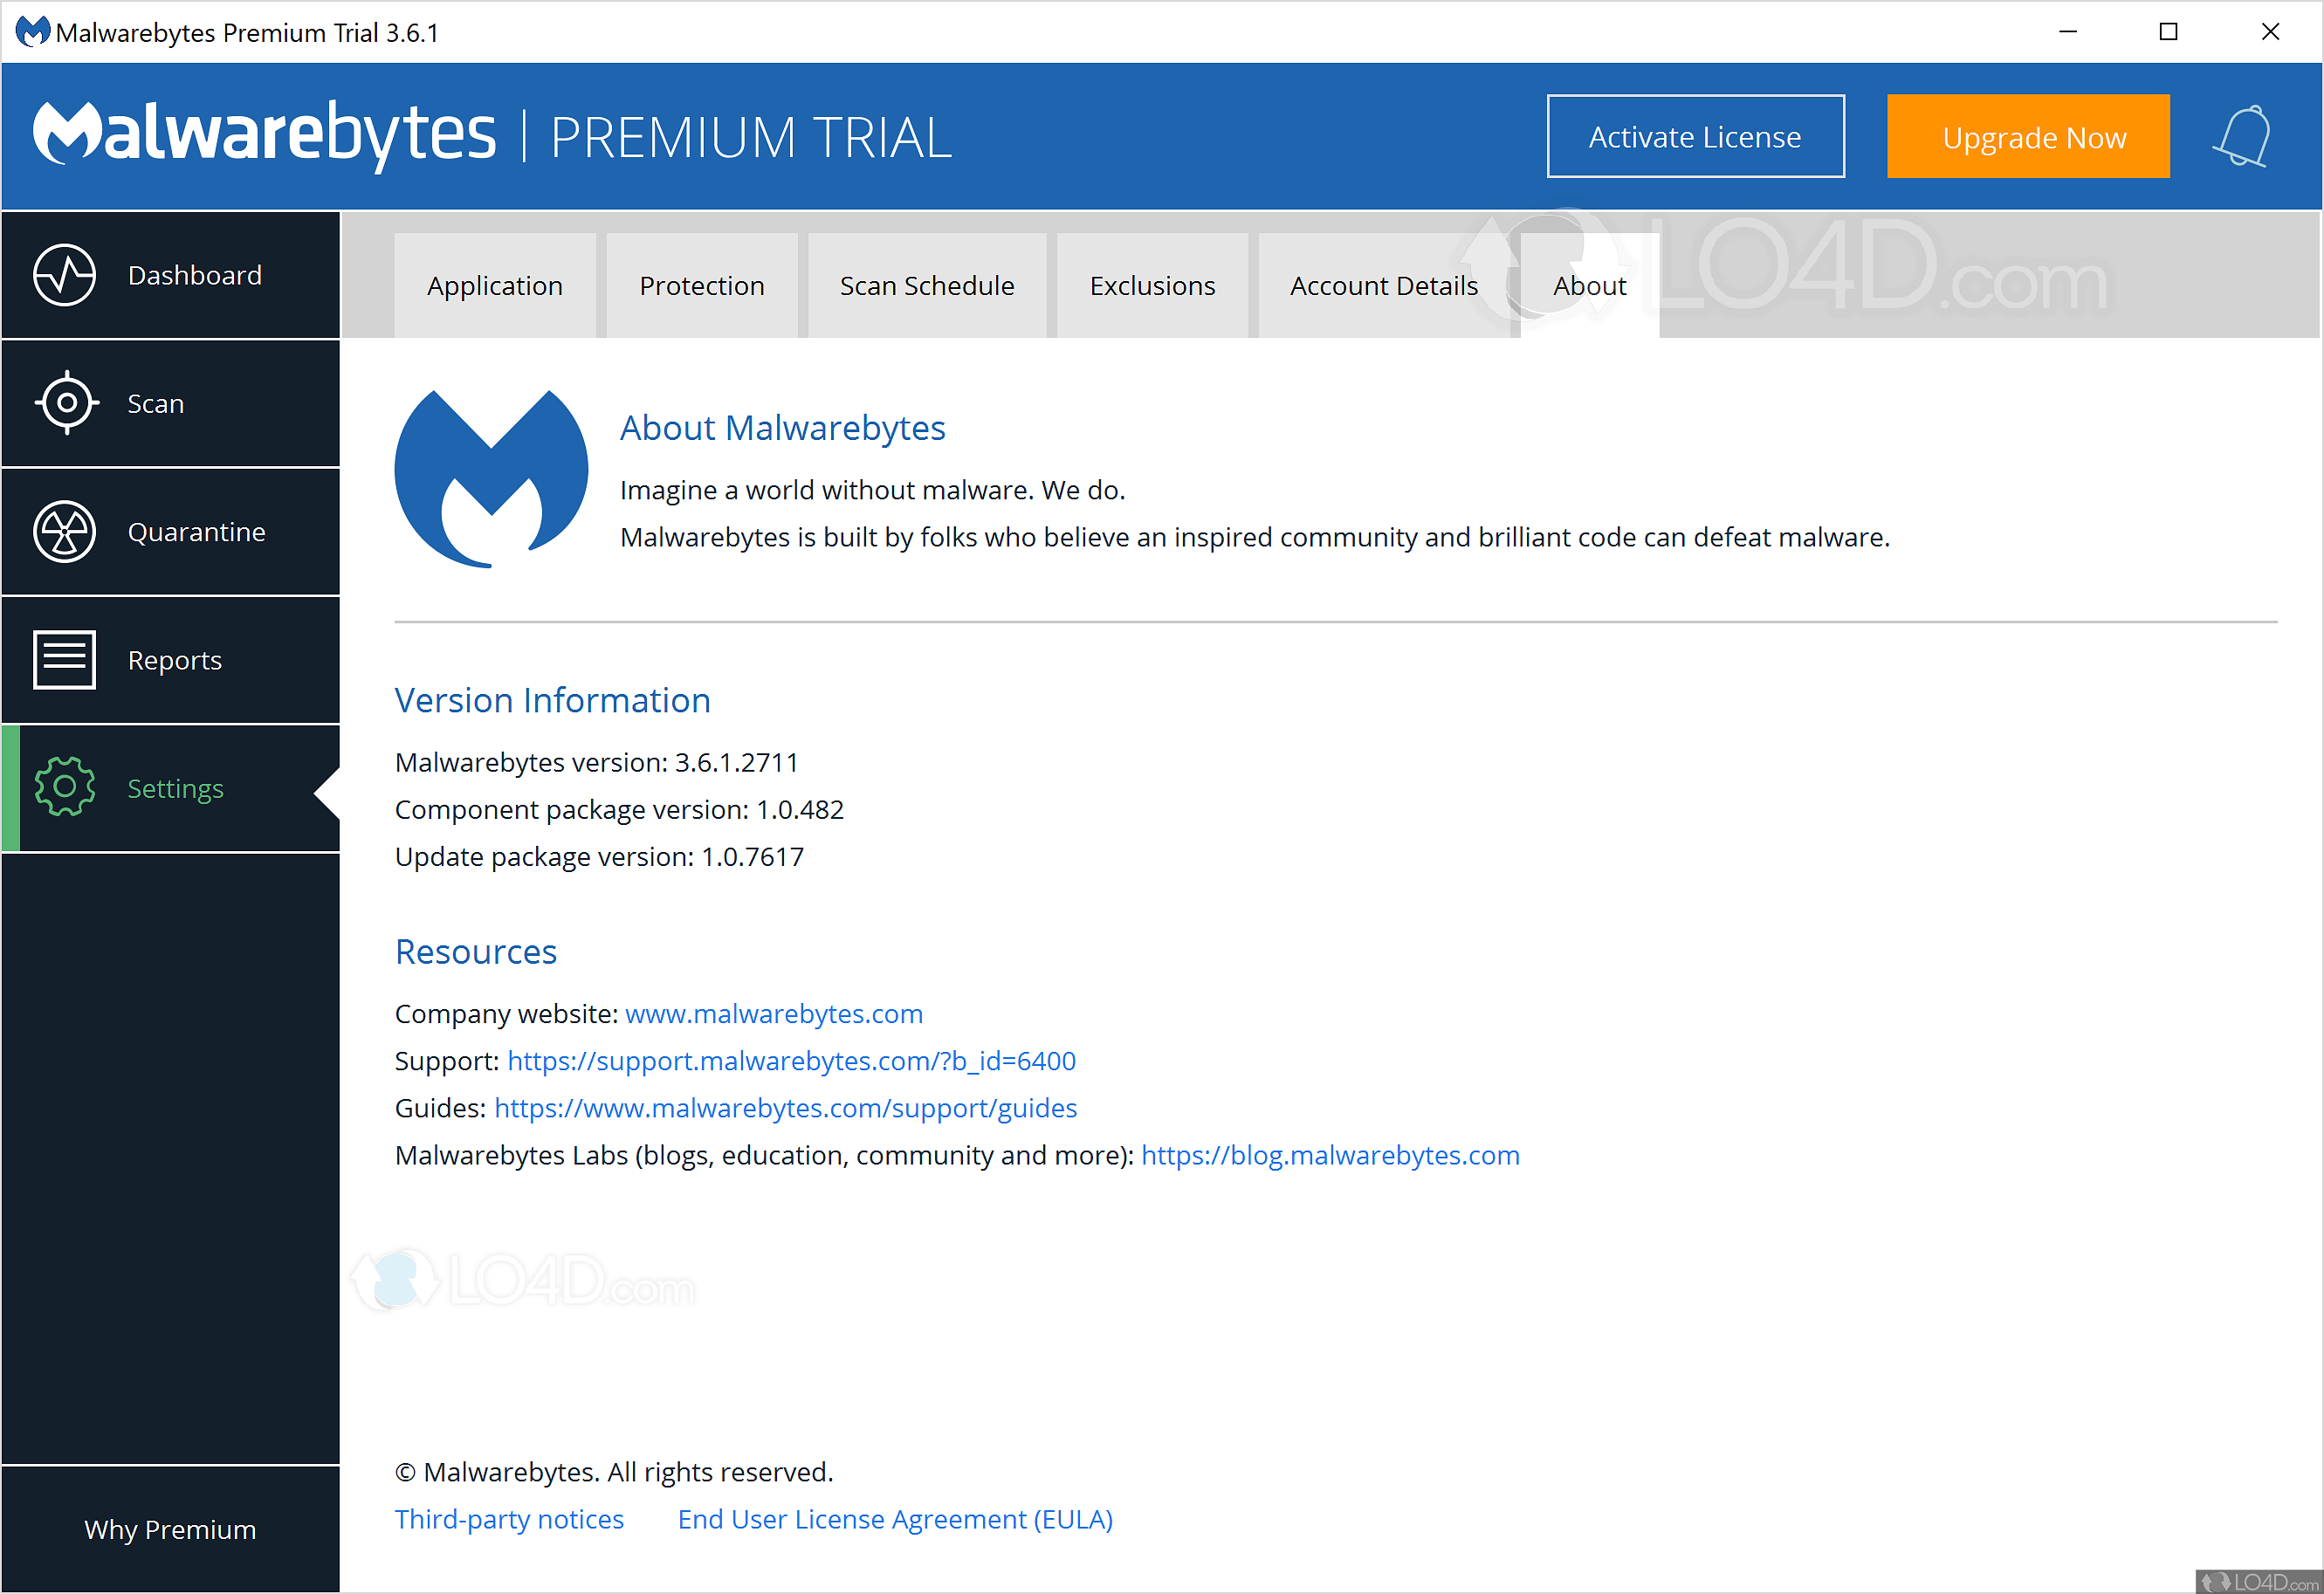 malwarebytes premium trial with avast